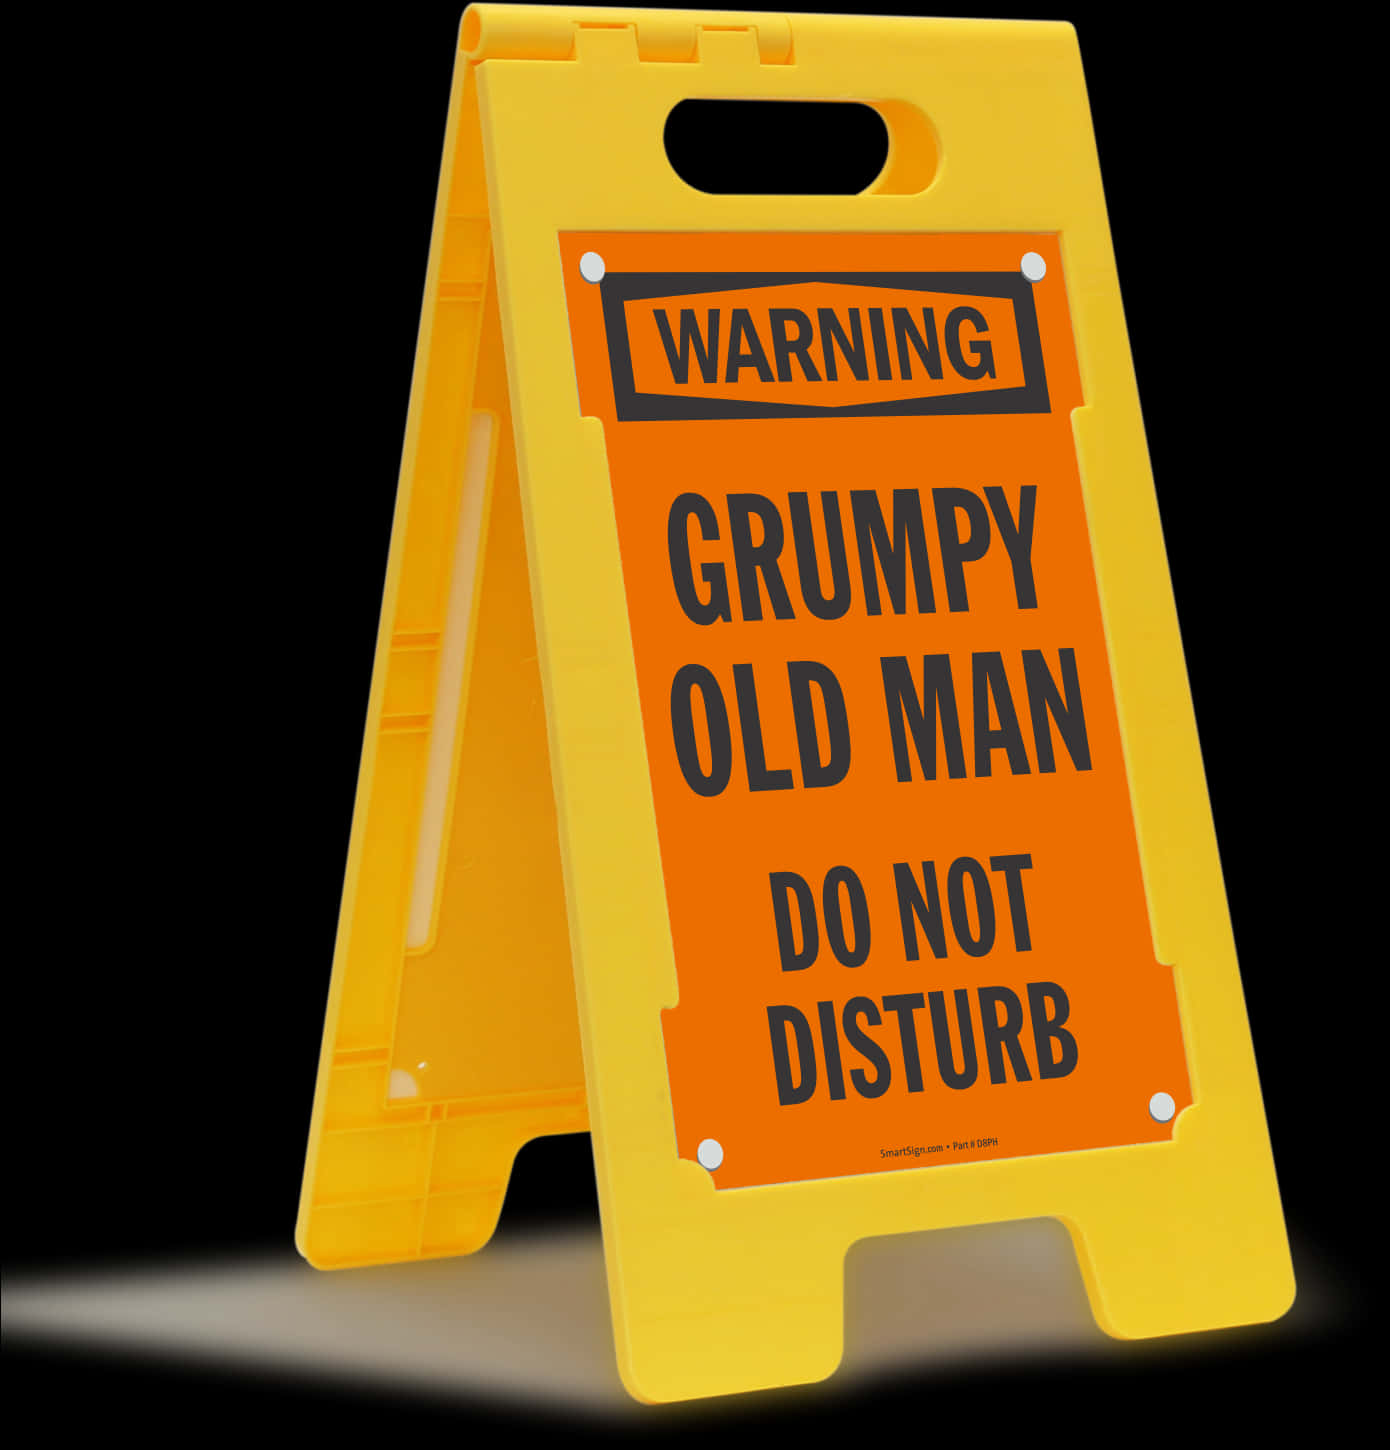 Grumpy Old Man Warning Sign